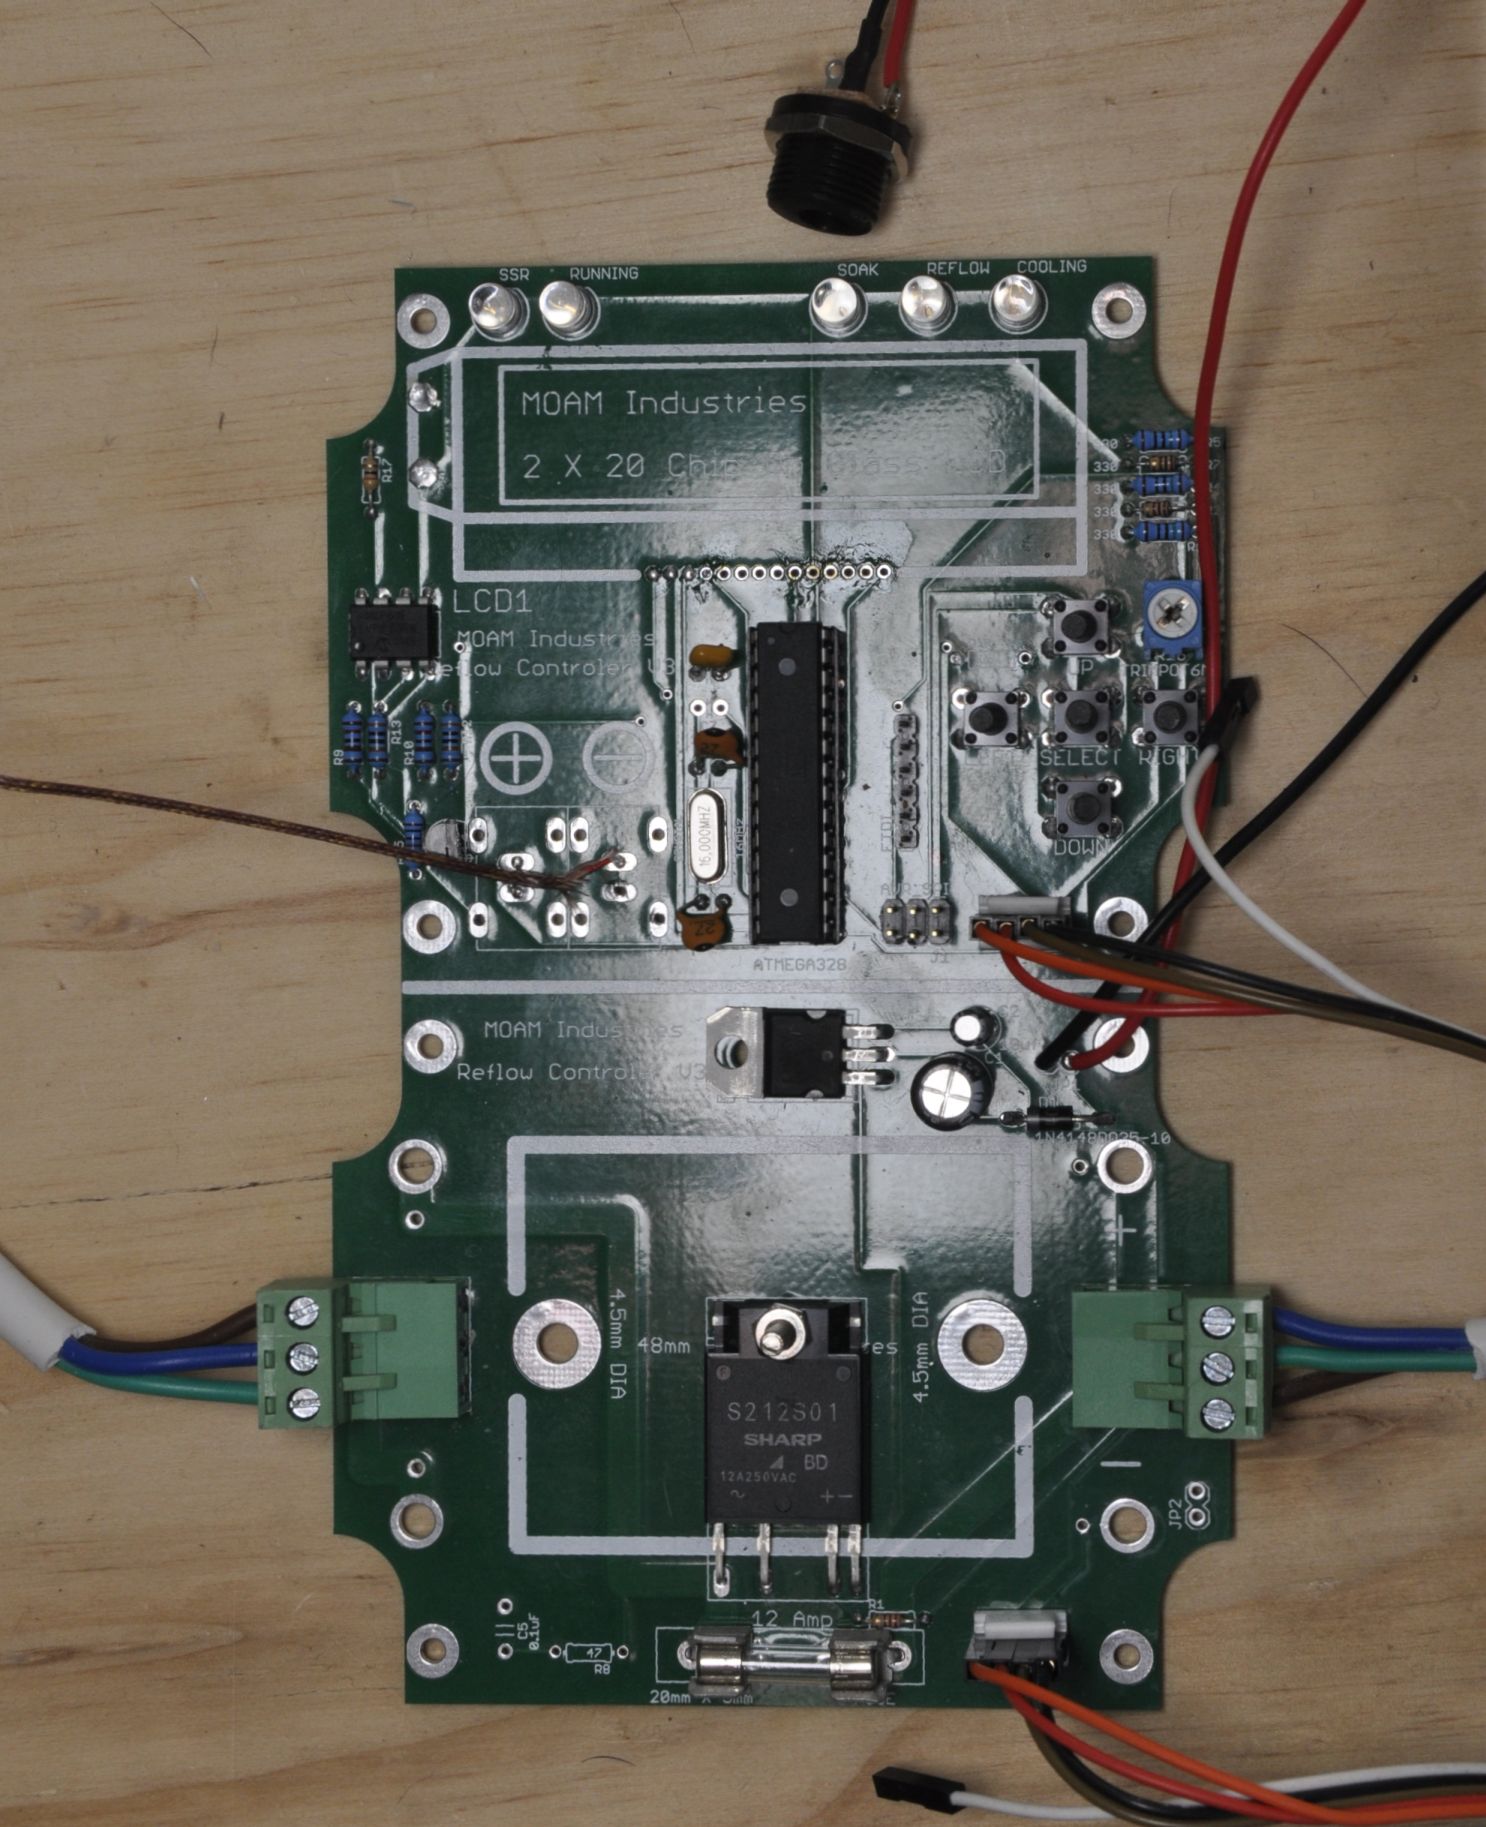 ![MFRC prototype](https://moamindustries.com/wp-content/uploads/2012/10/prototype2-assembled-resized.jpg "My First Reflow Controller, Prototype 2, assembled")